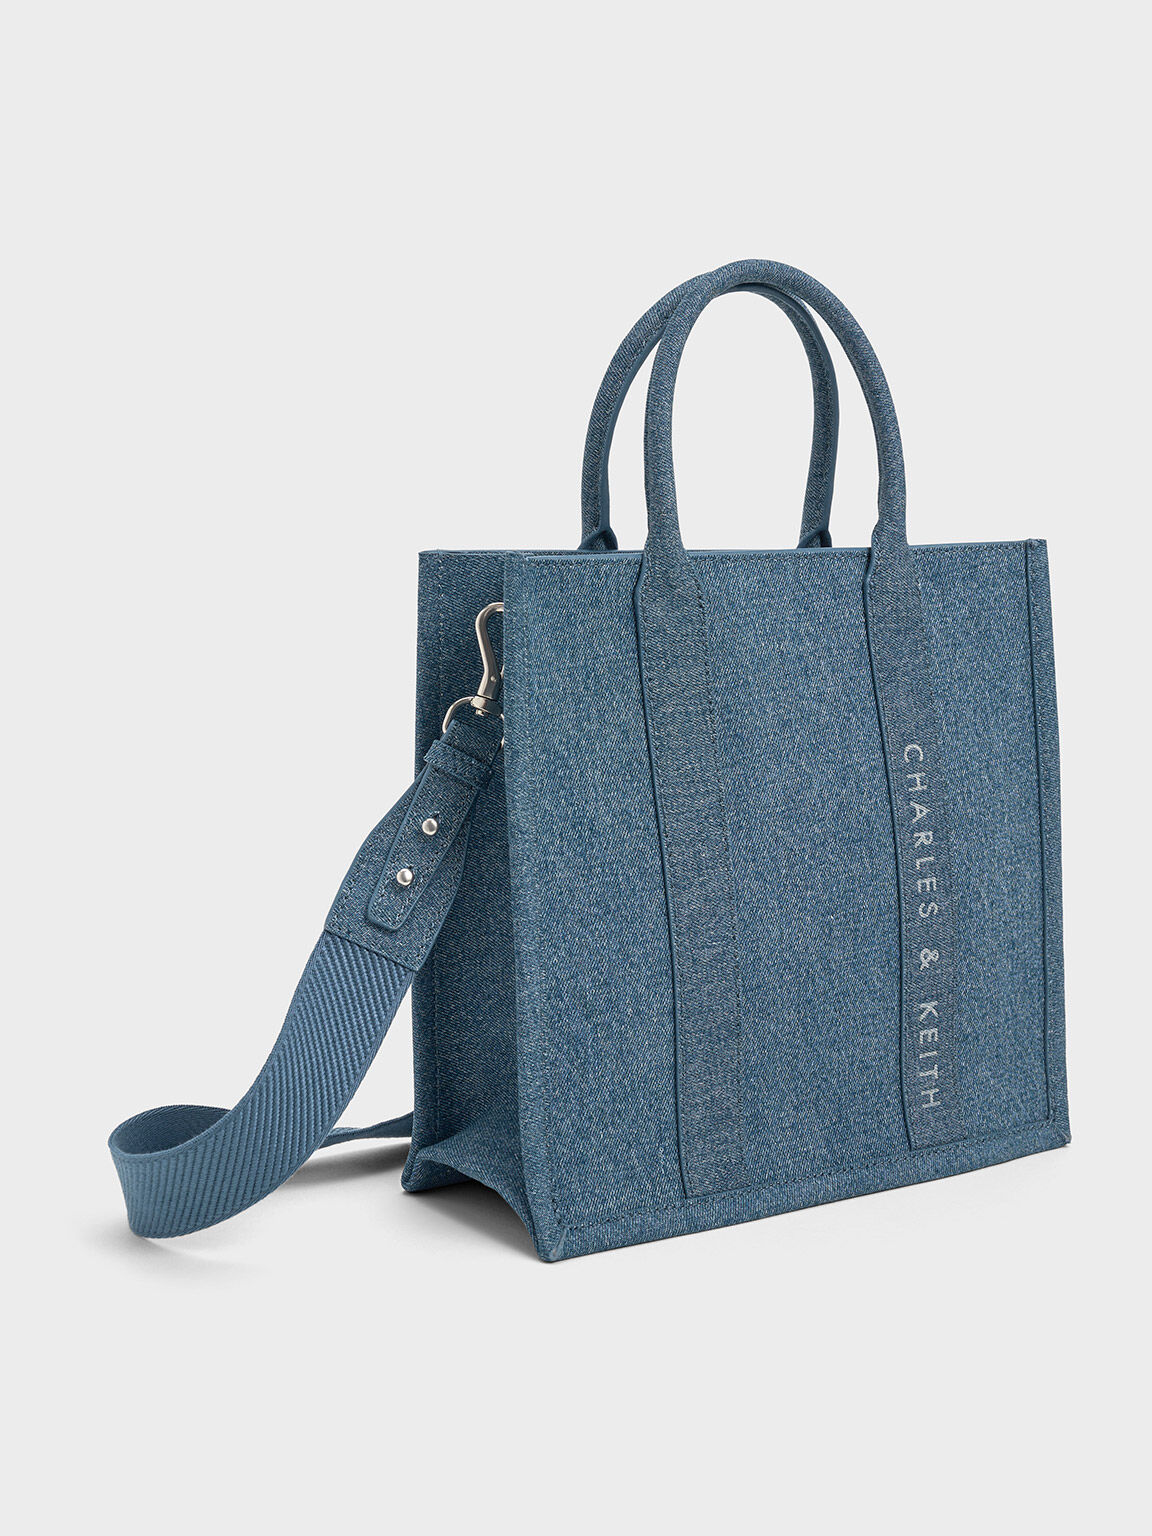 Blue Bags for Women, Shop Online